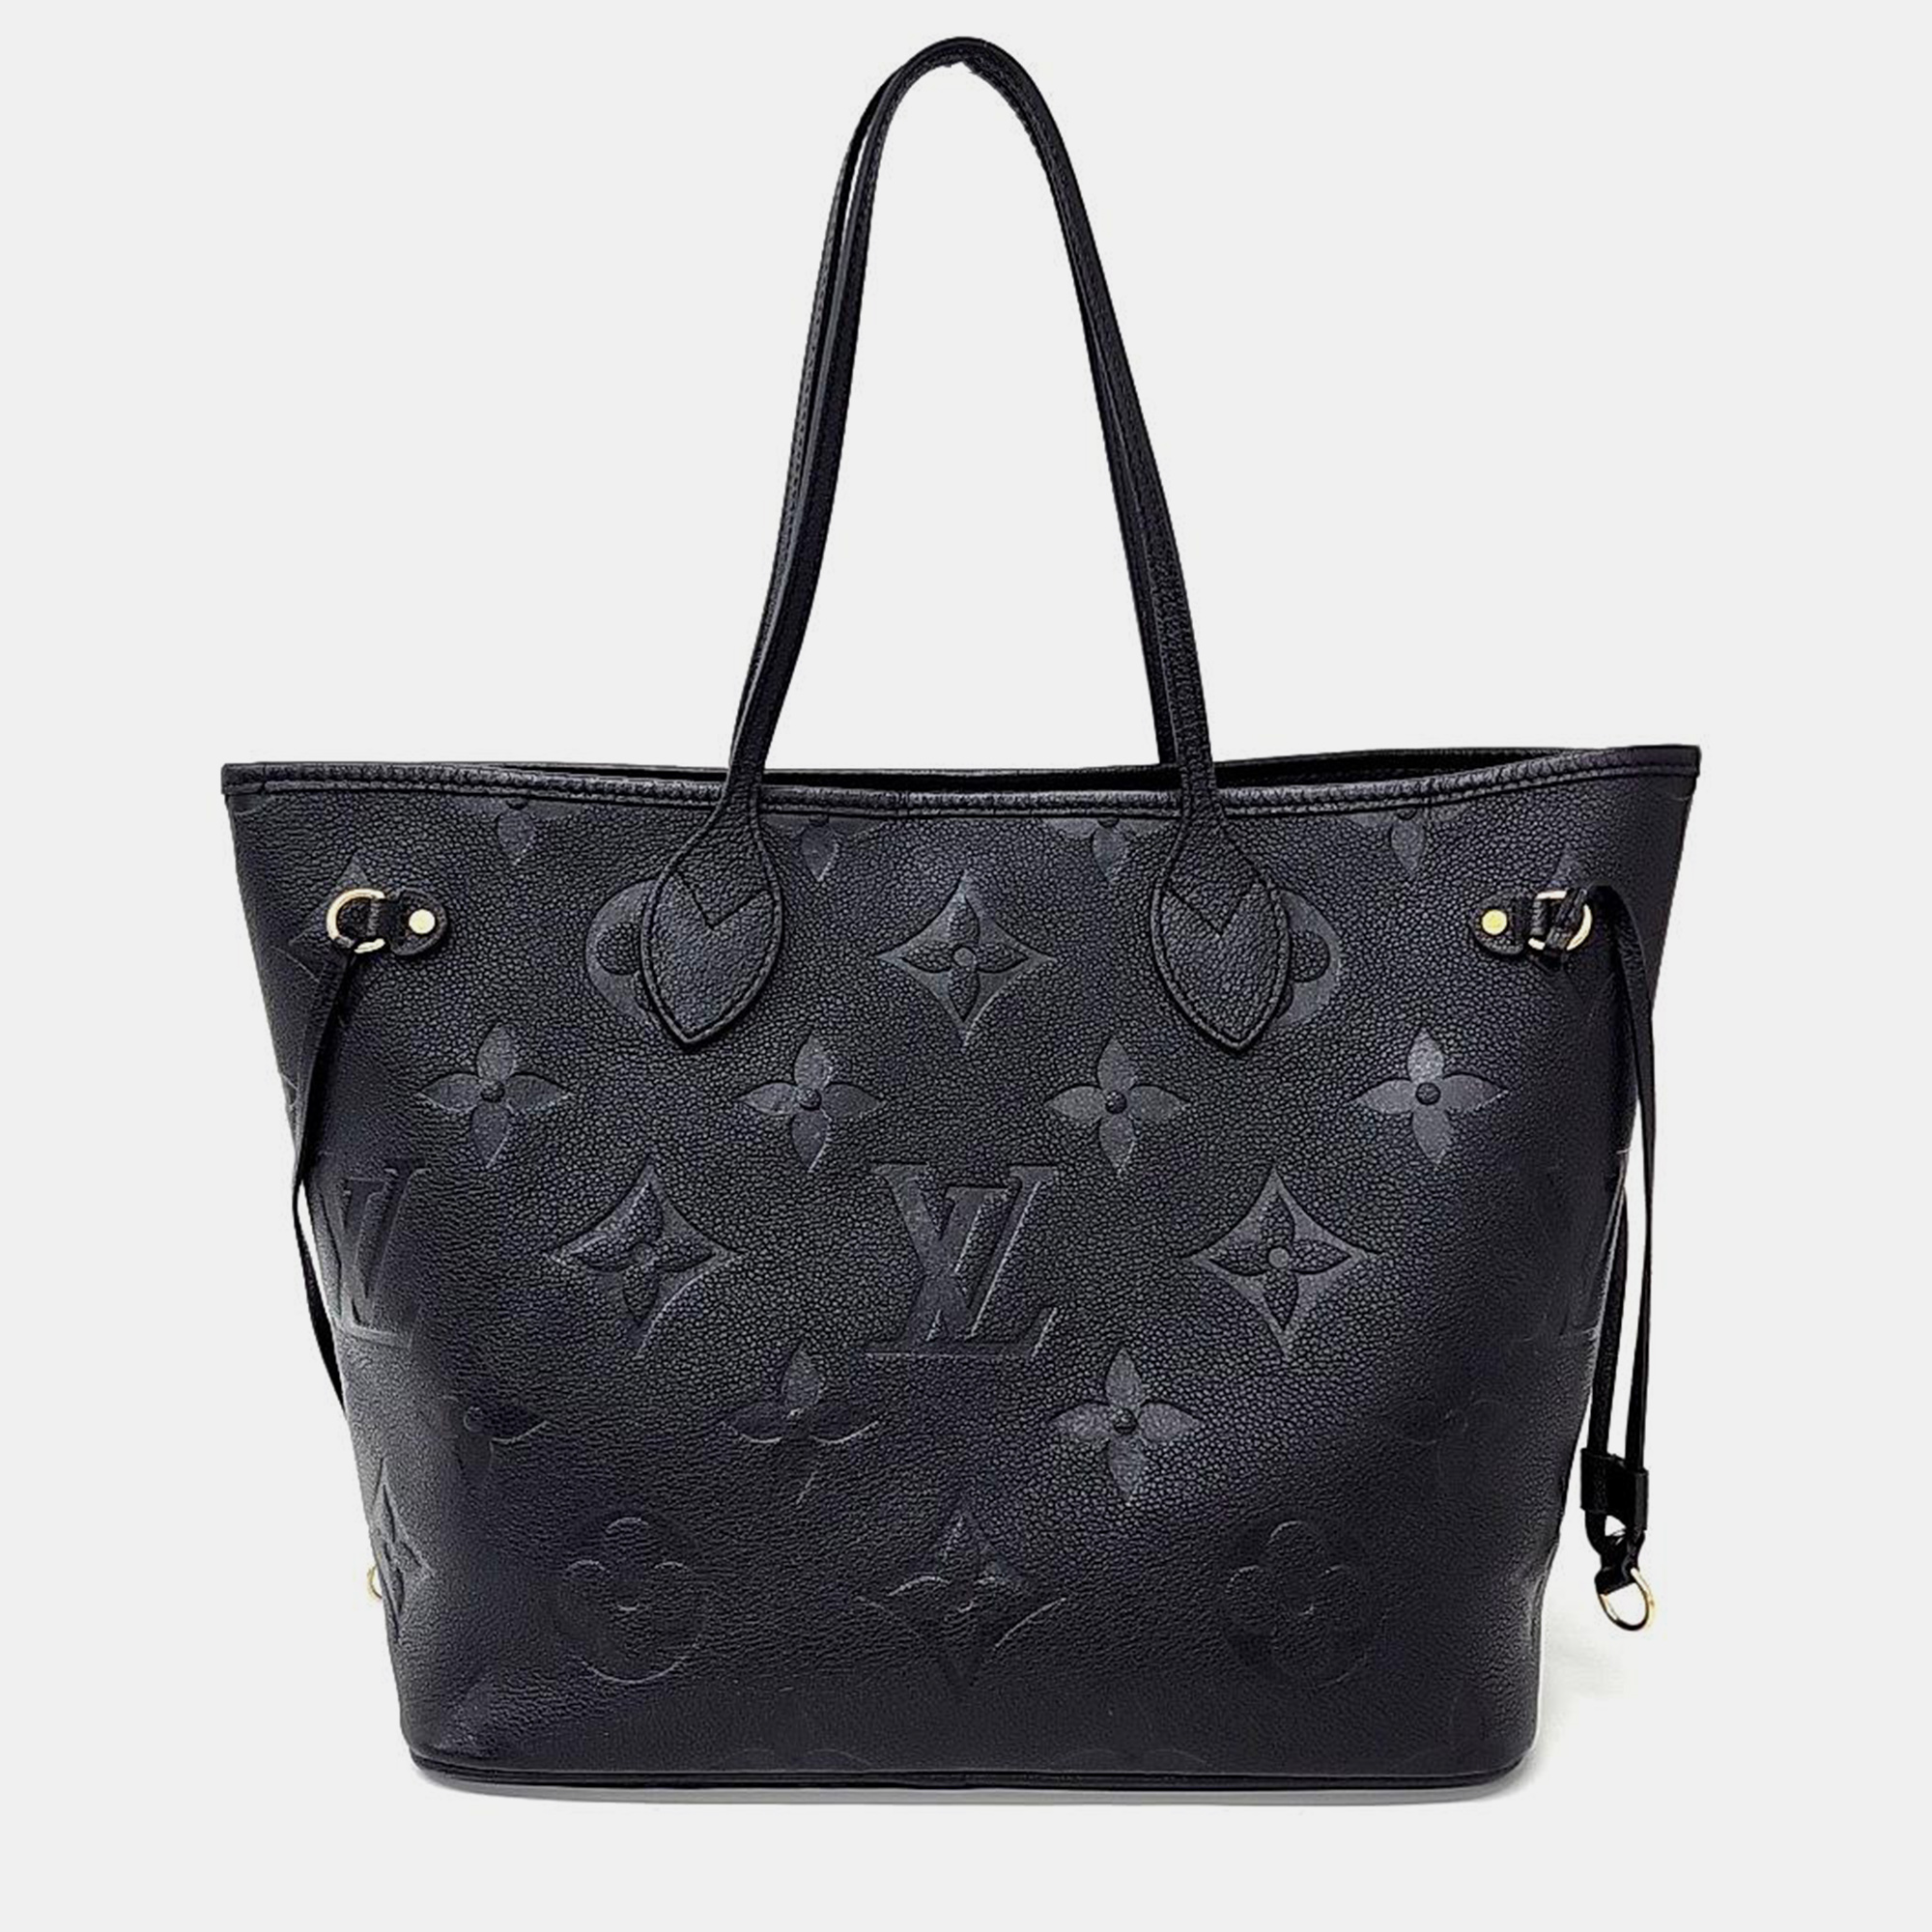 Louis vuitton black giant monogram empriente leather neverfull mm tote bag